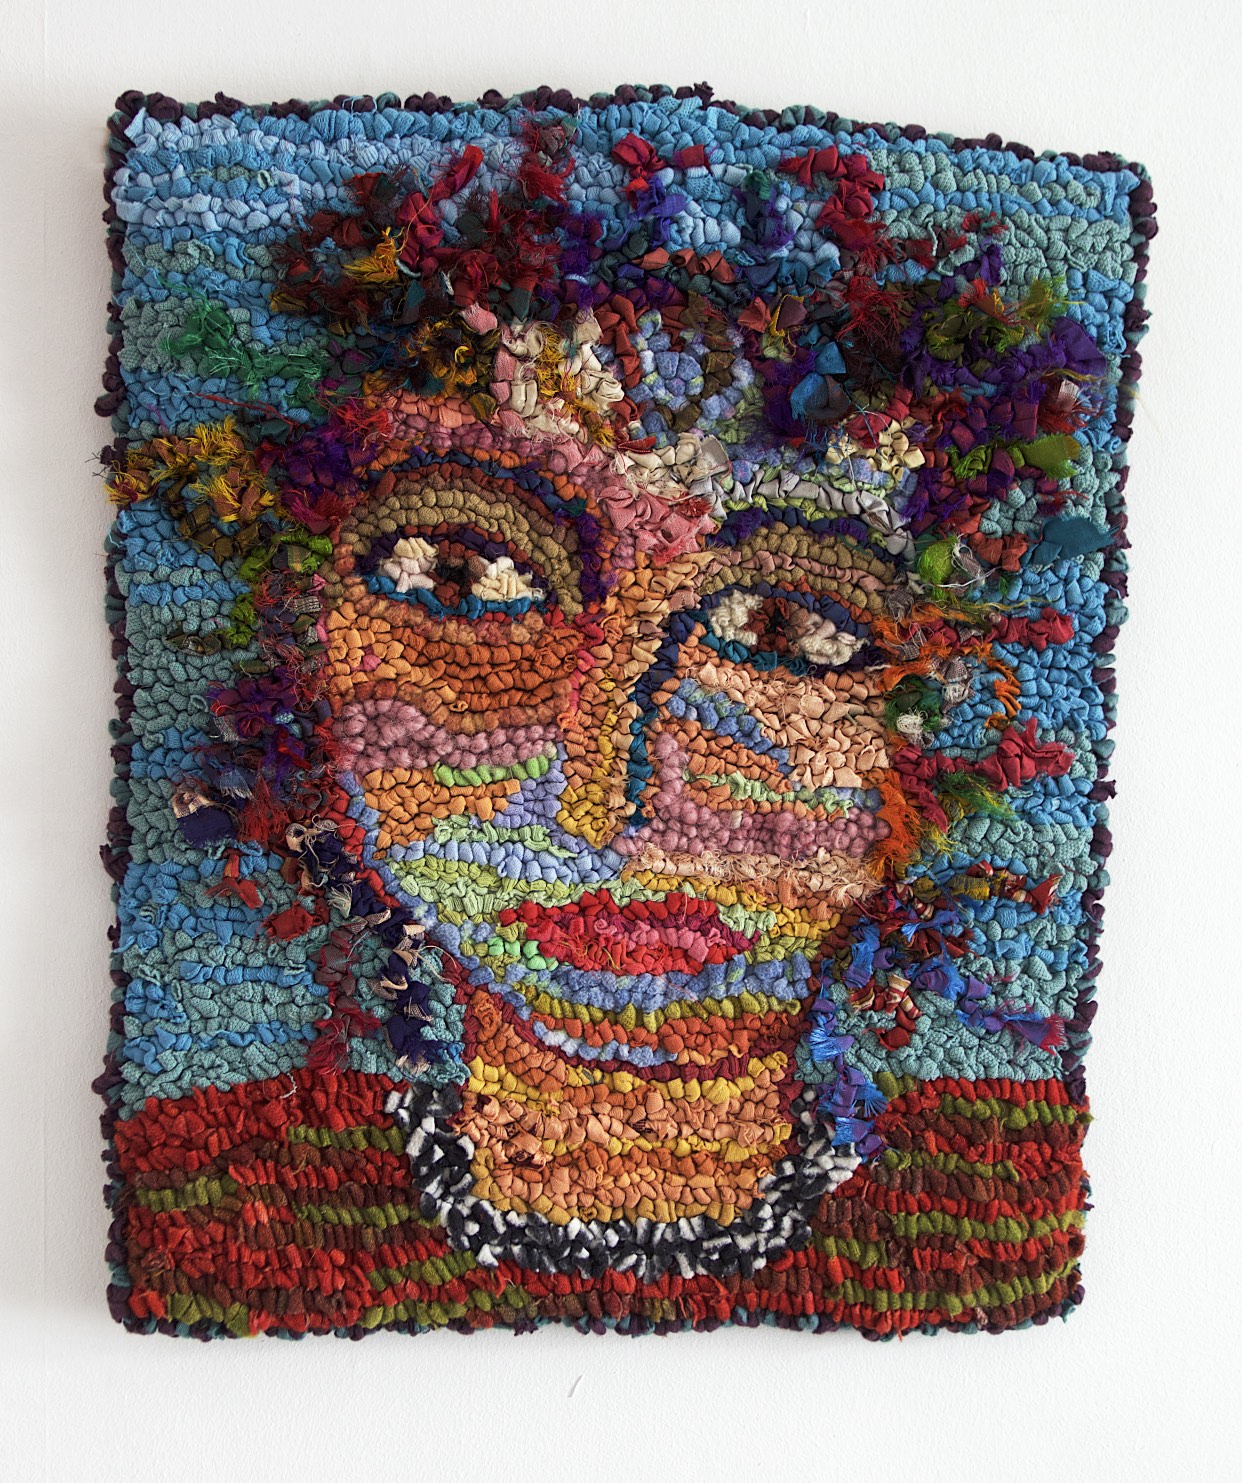 Sue Dove - Self portrait rag rug